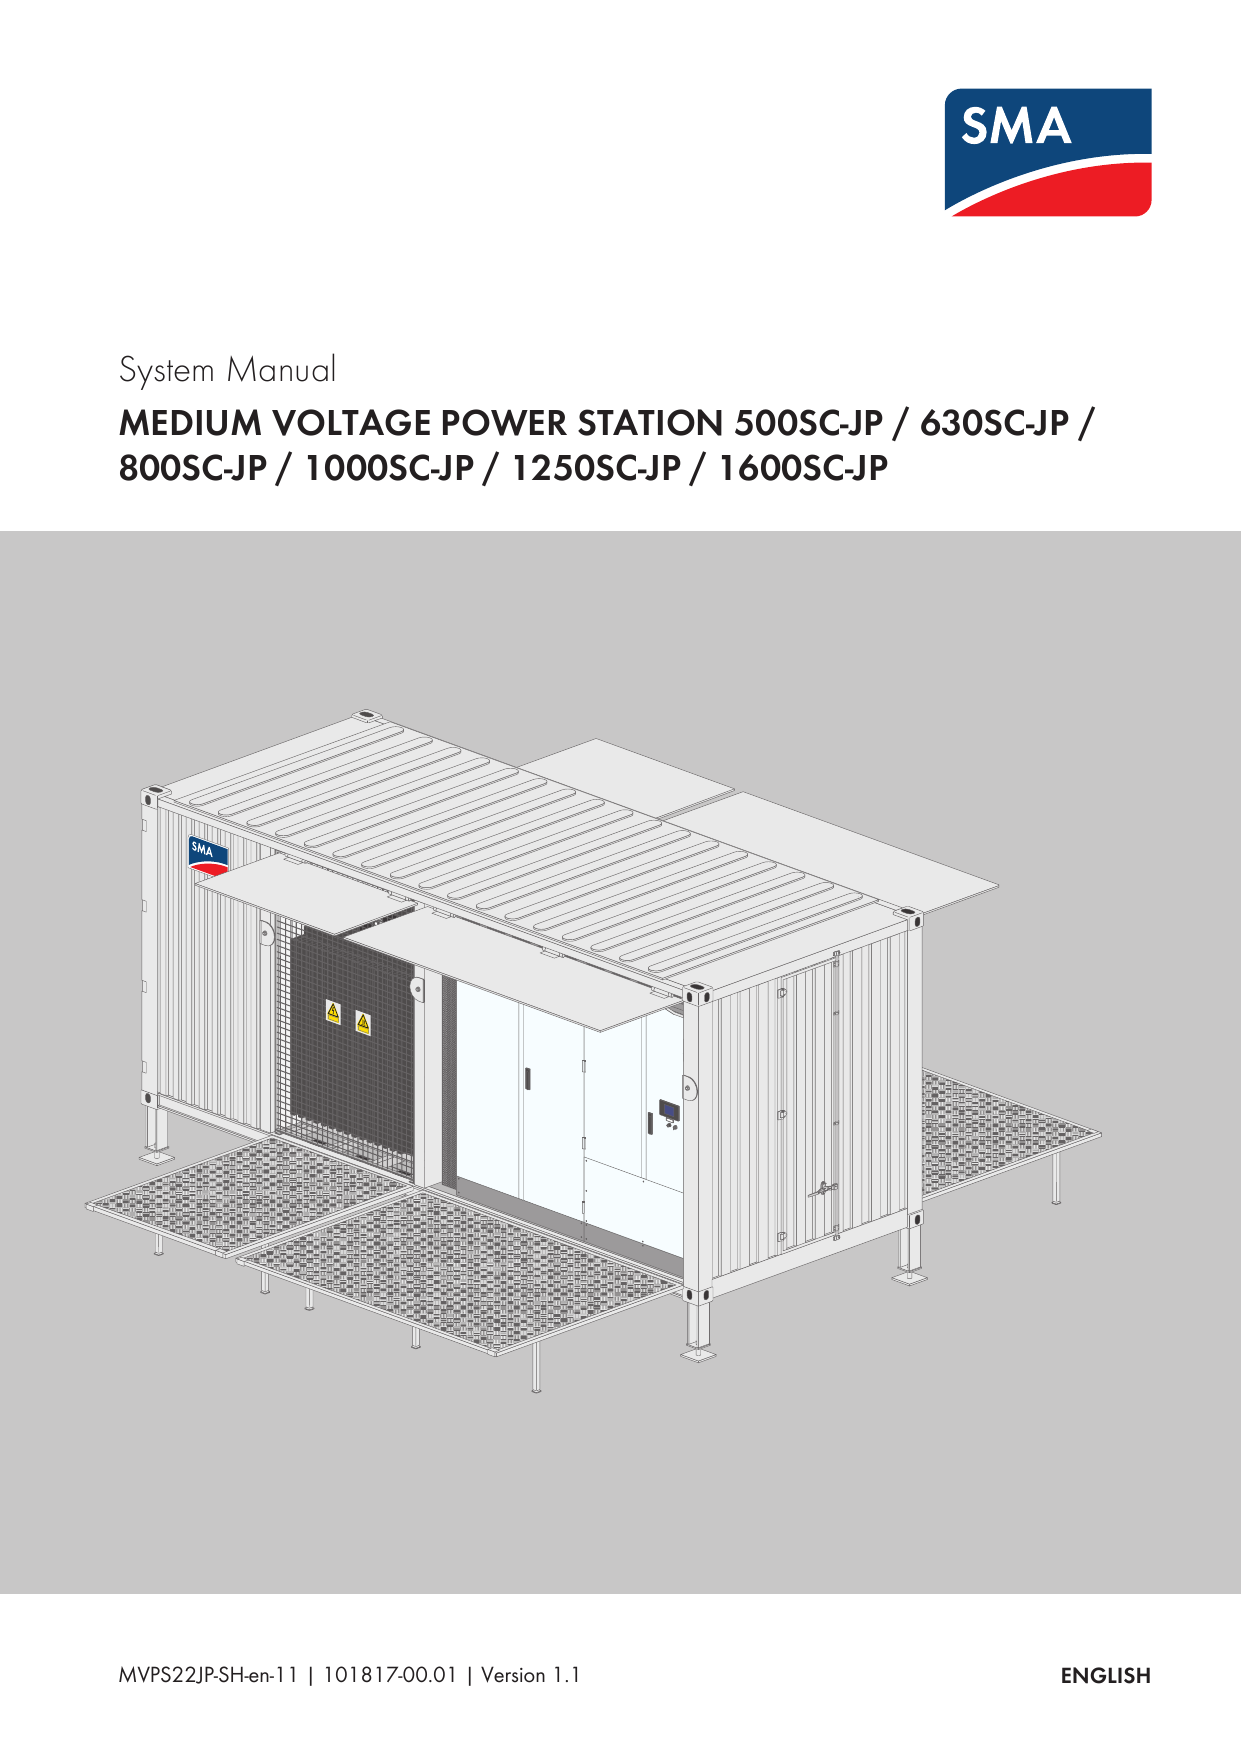 System Manual Medium Voltage Power Station Manualzz